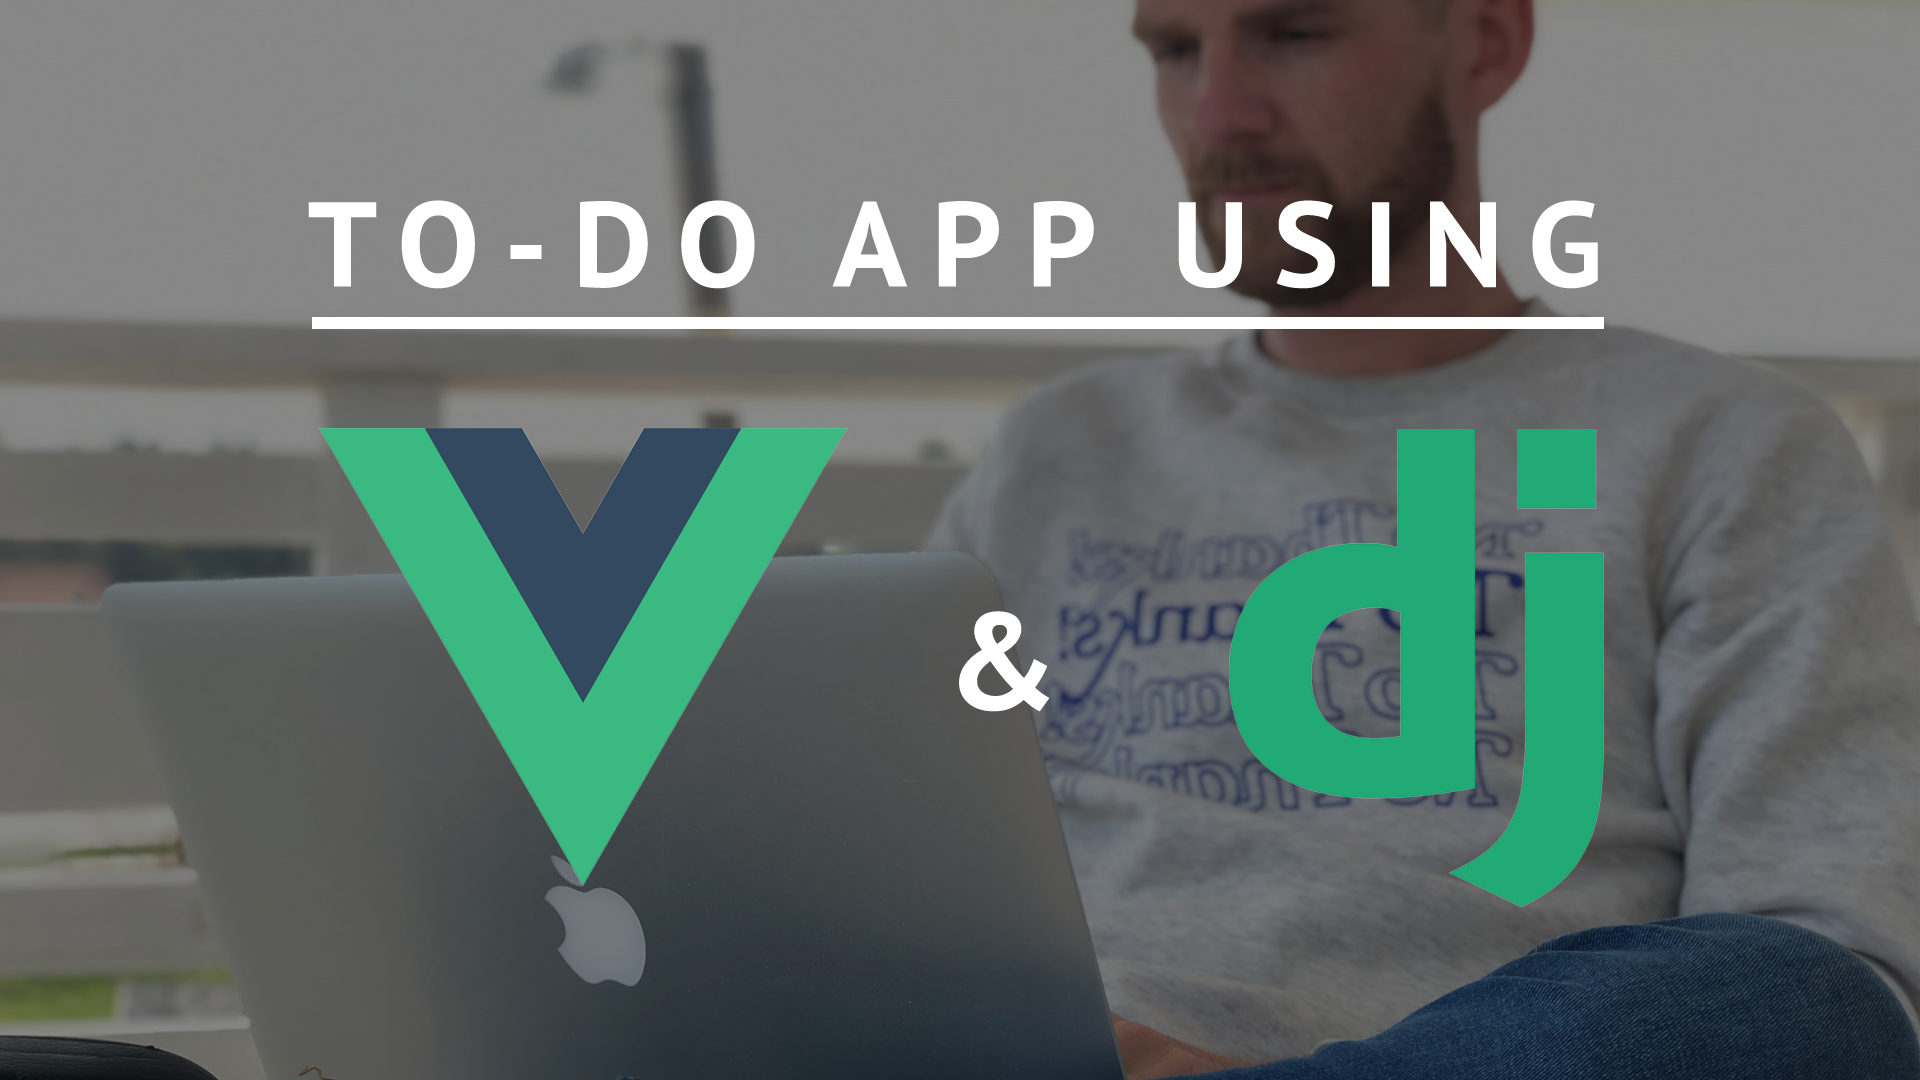 Build a todo app using Django and Vue (Django REST framework)